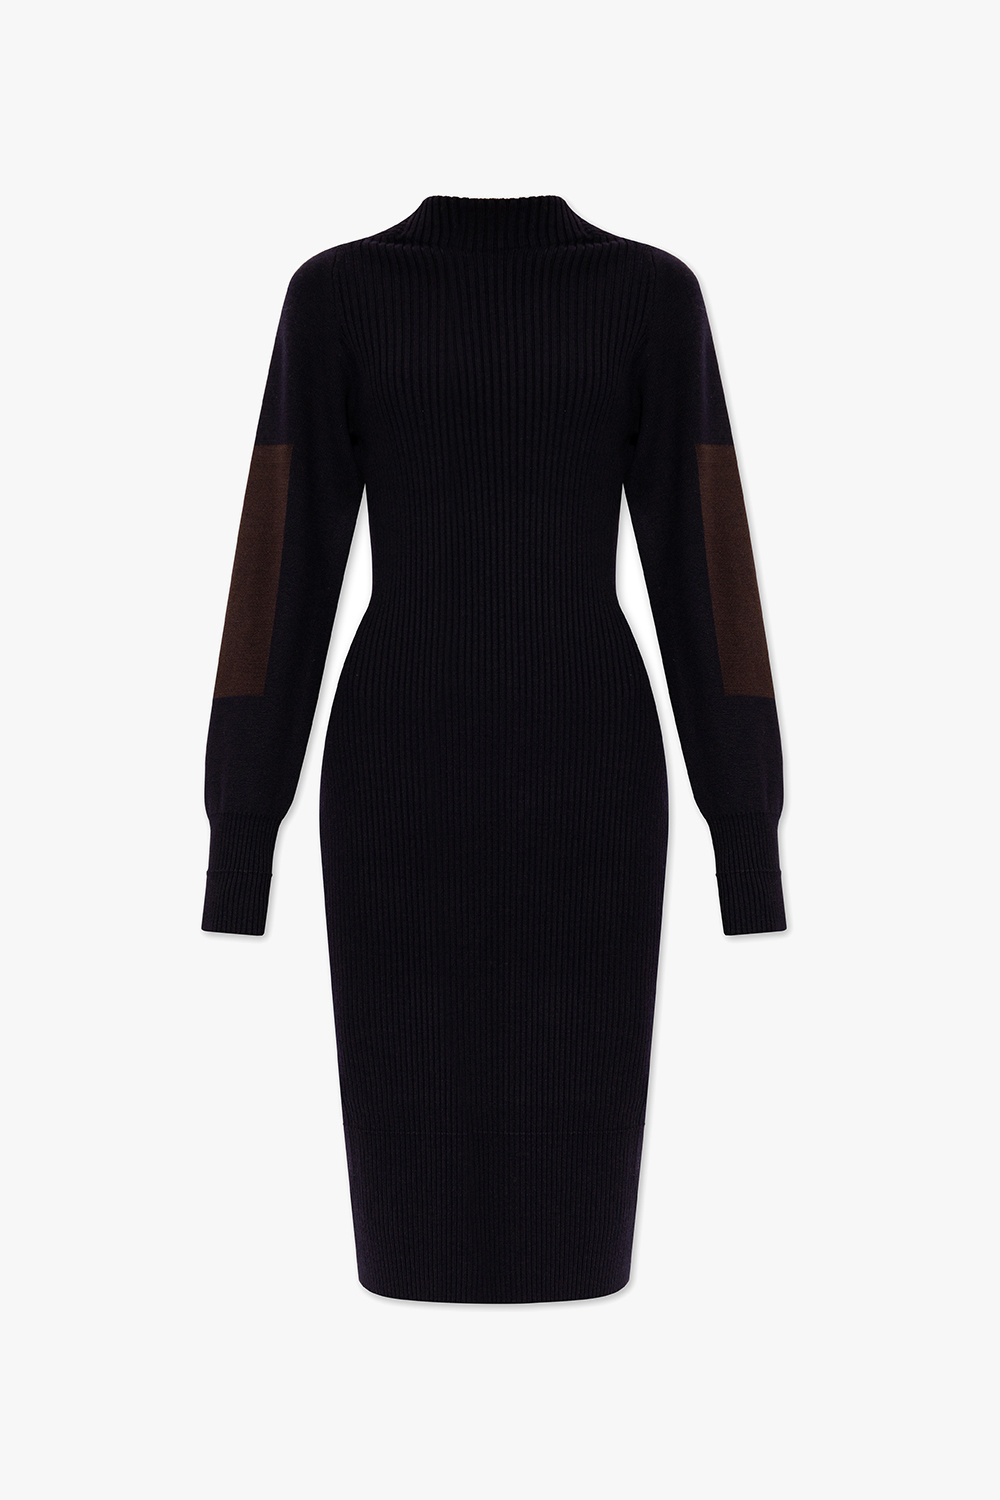 Victoria Beckham Icon Clash Short-Sleeve Dress